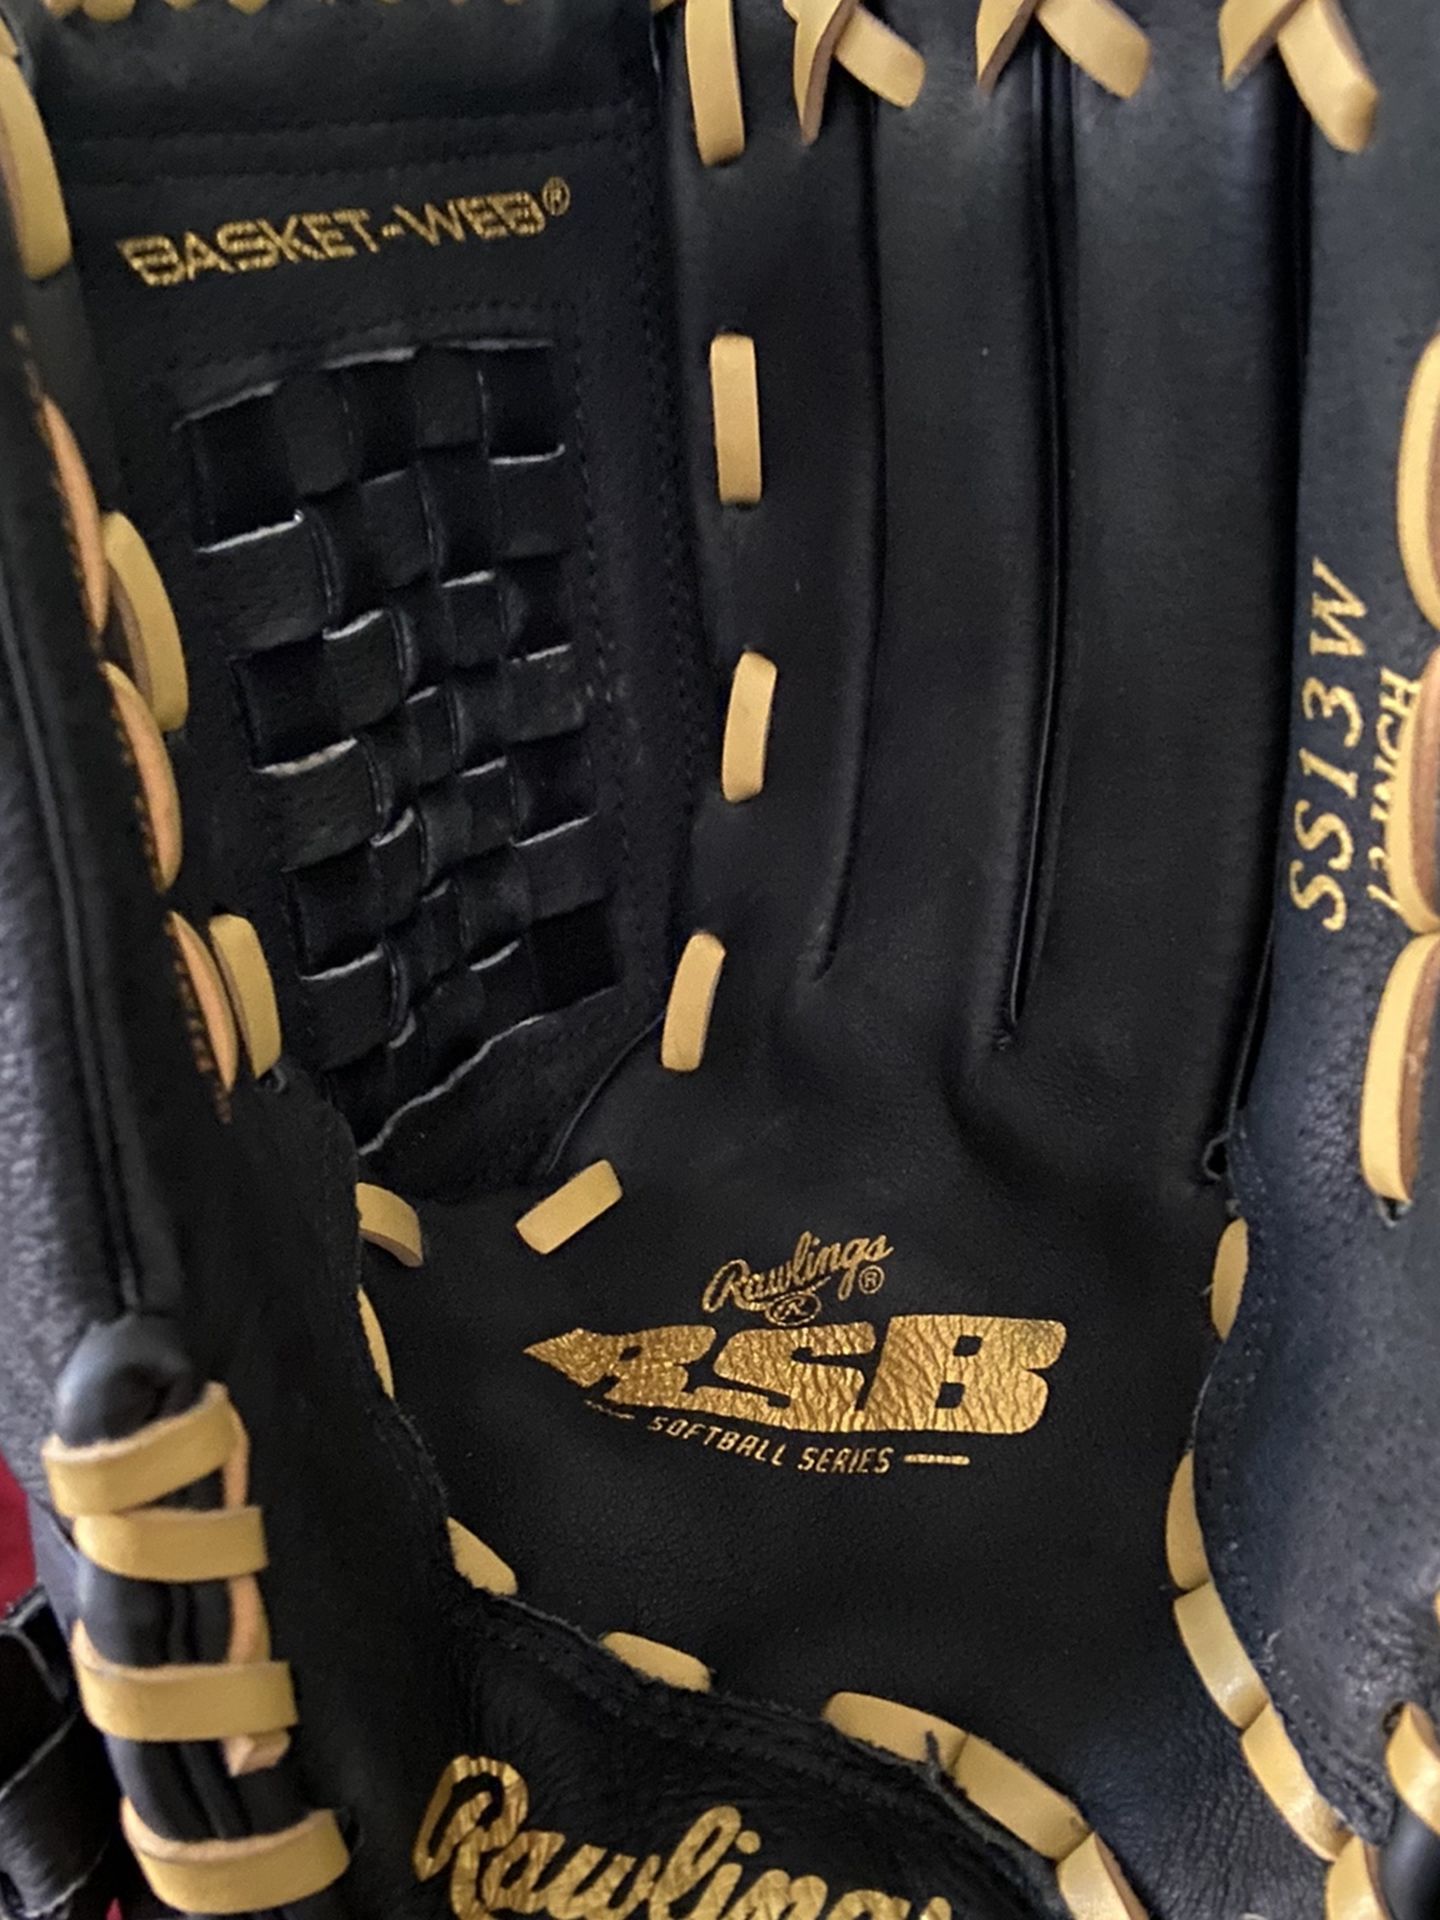 Rawlings Softball Glove